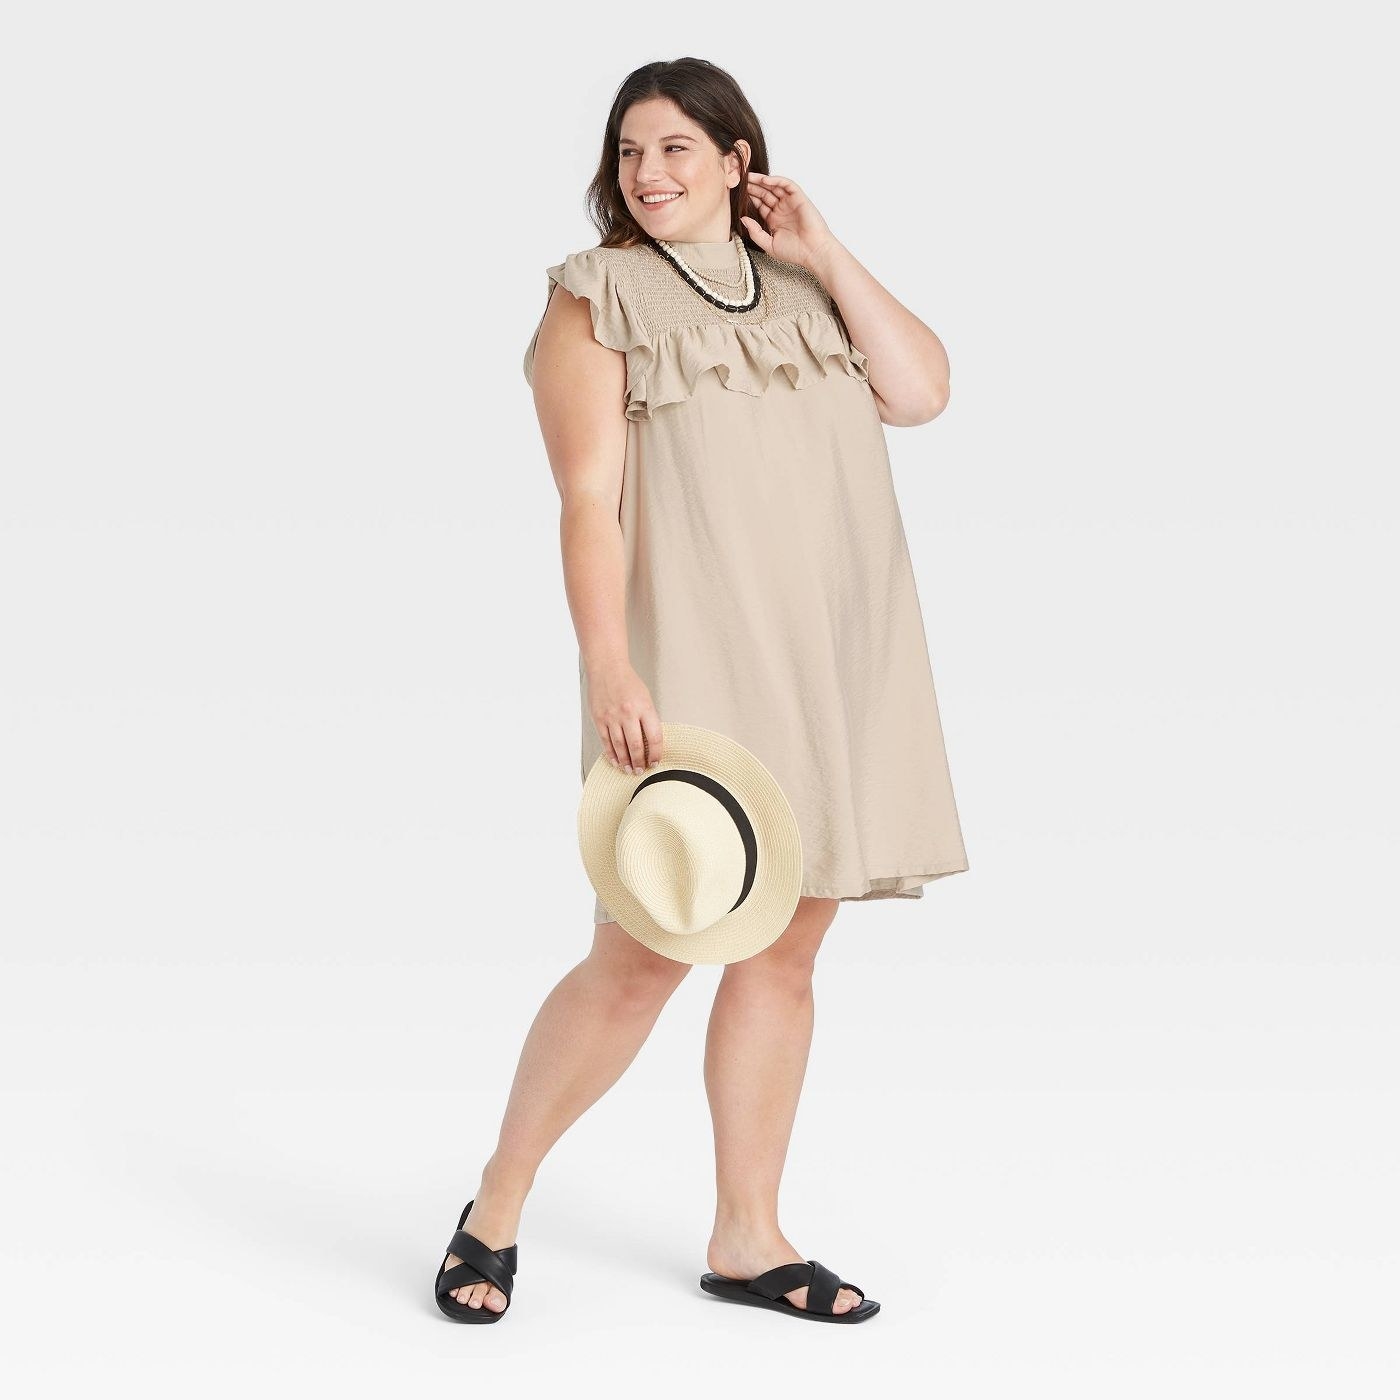 AA model wearing a sleeveless tan ruffle dress